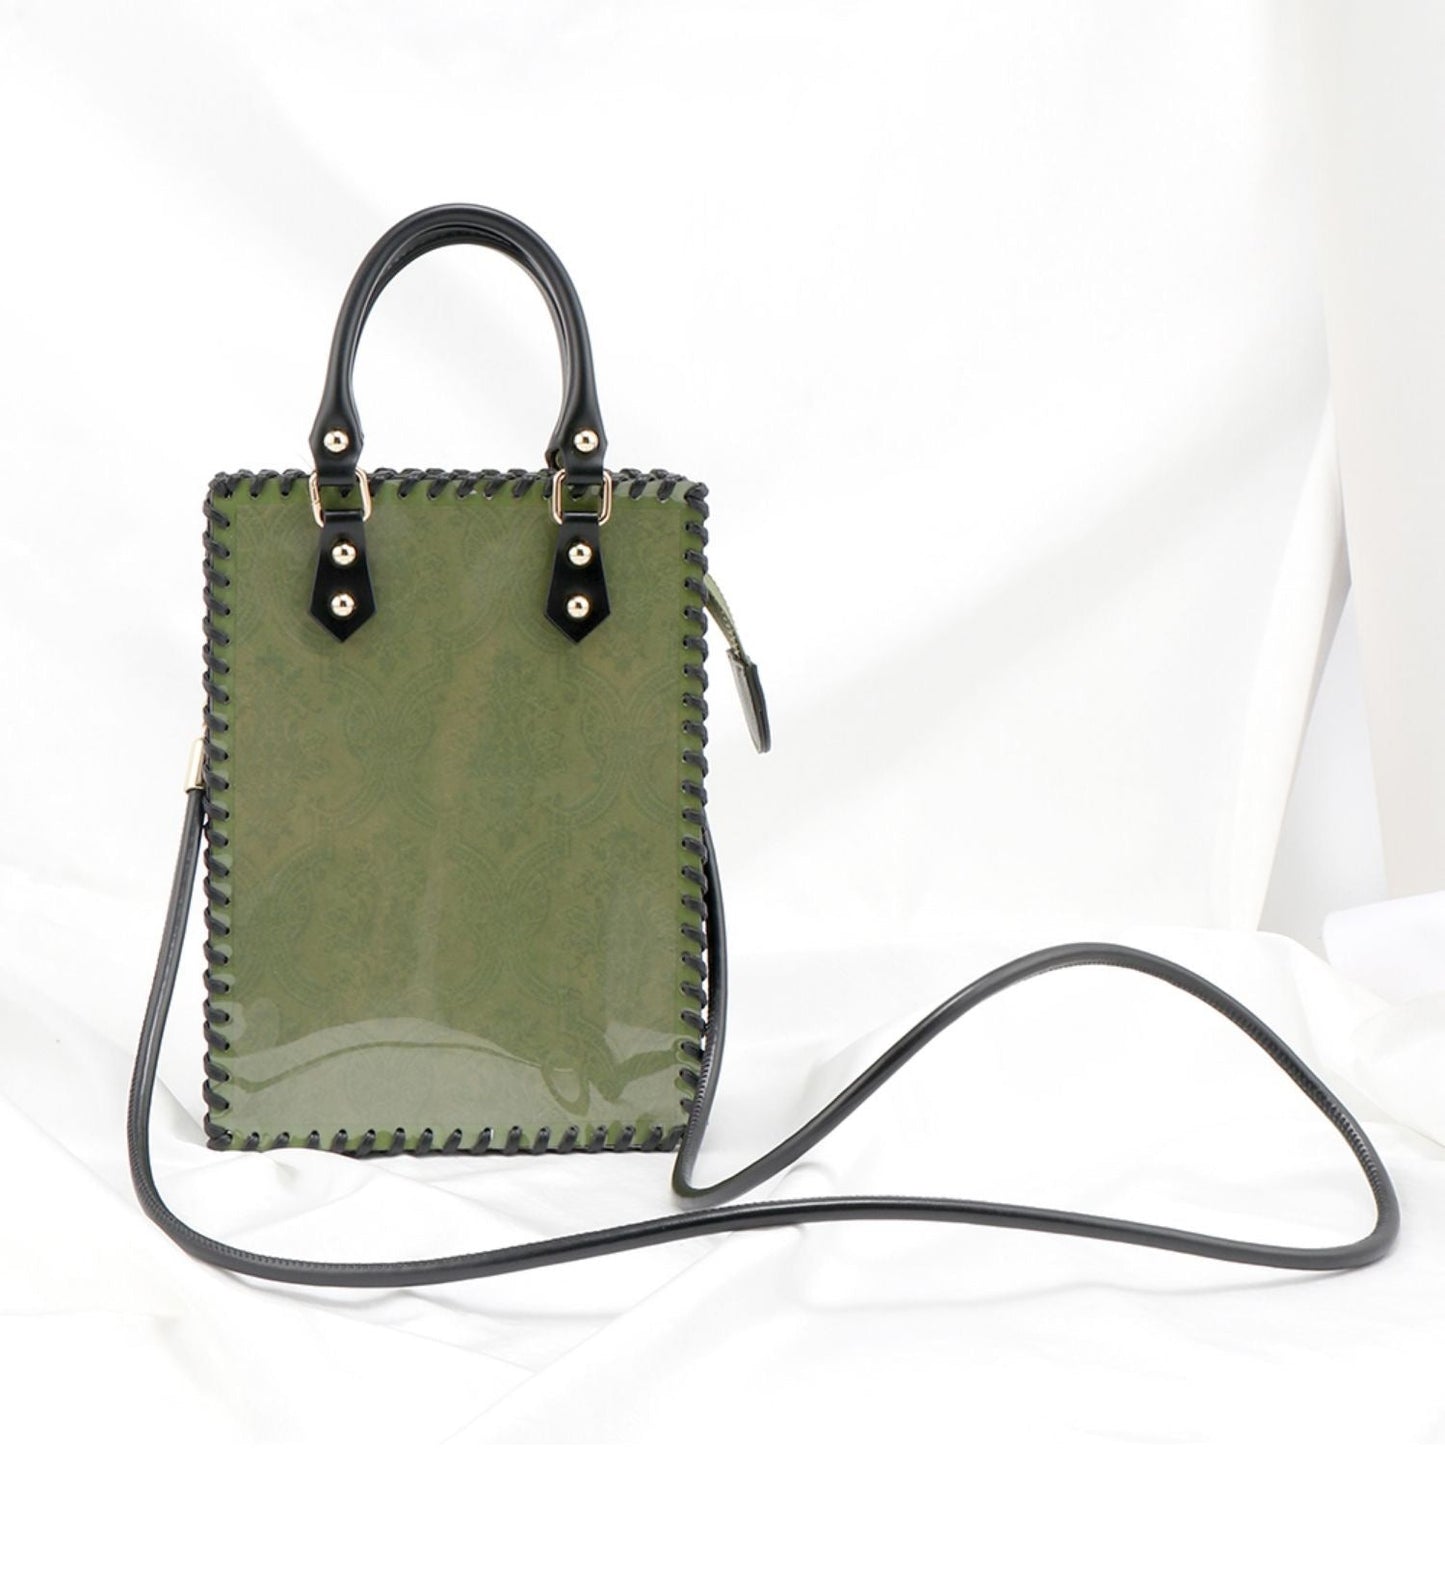 DIY Clear Shopping Bag Kit – Diy Shopping Bag Kit｜ winxinshop ｜ winxinbear